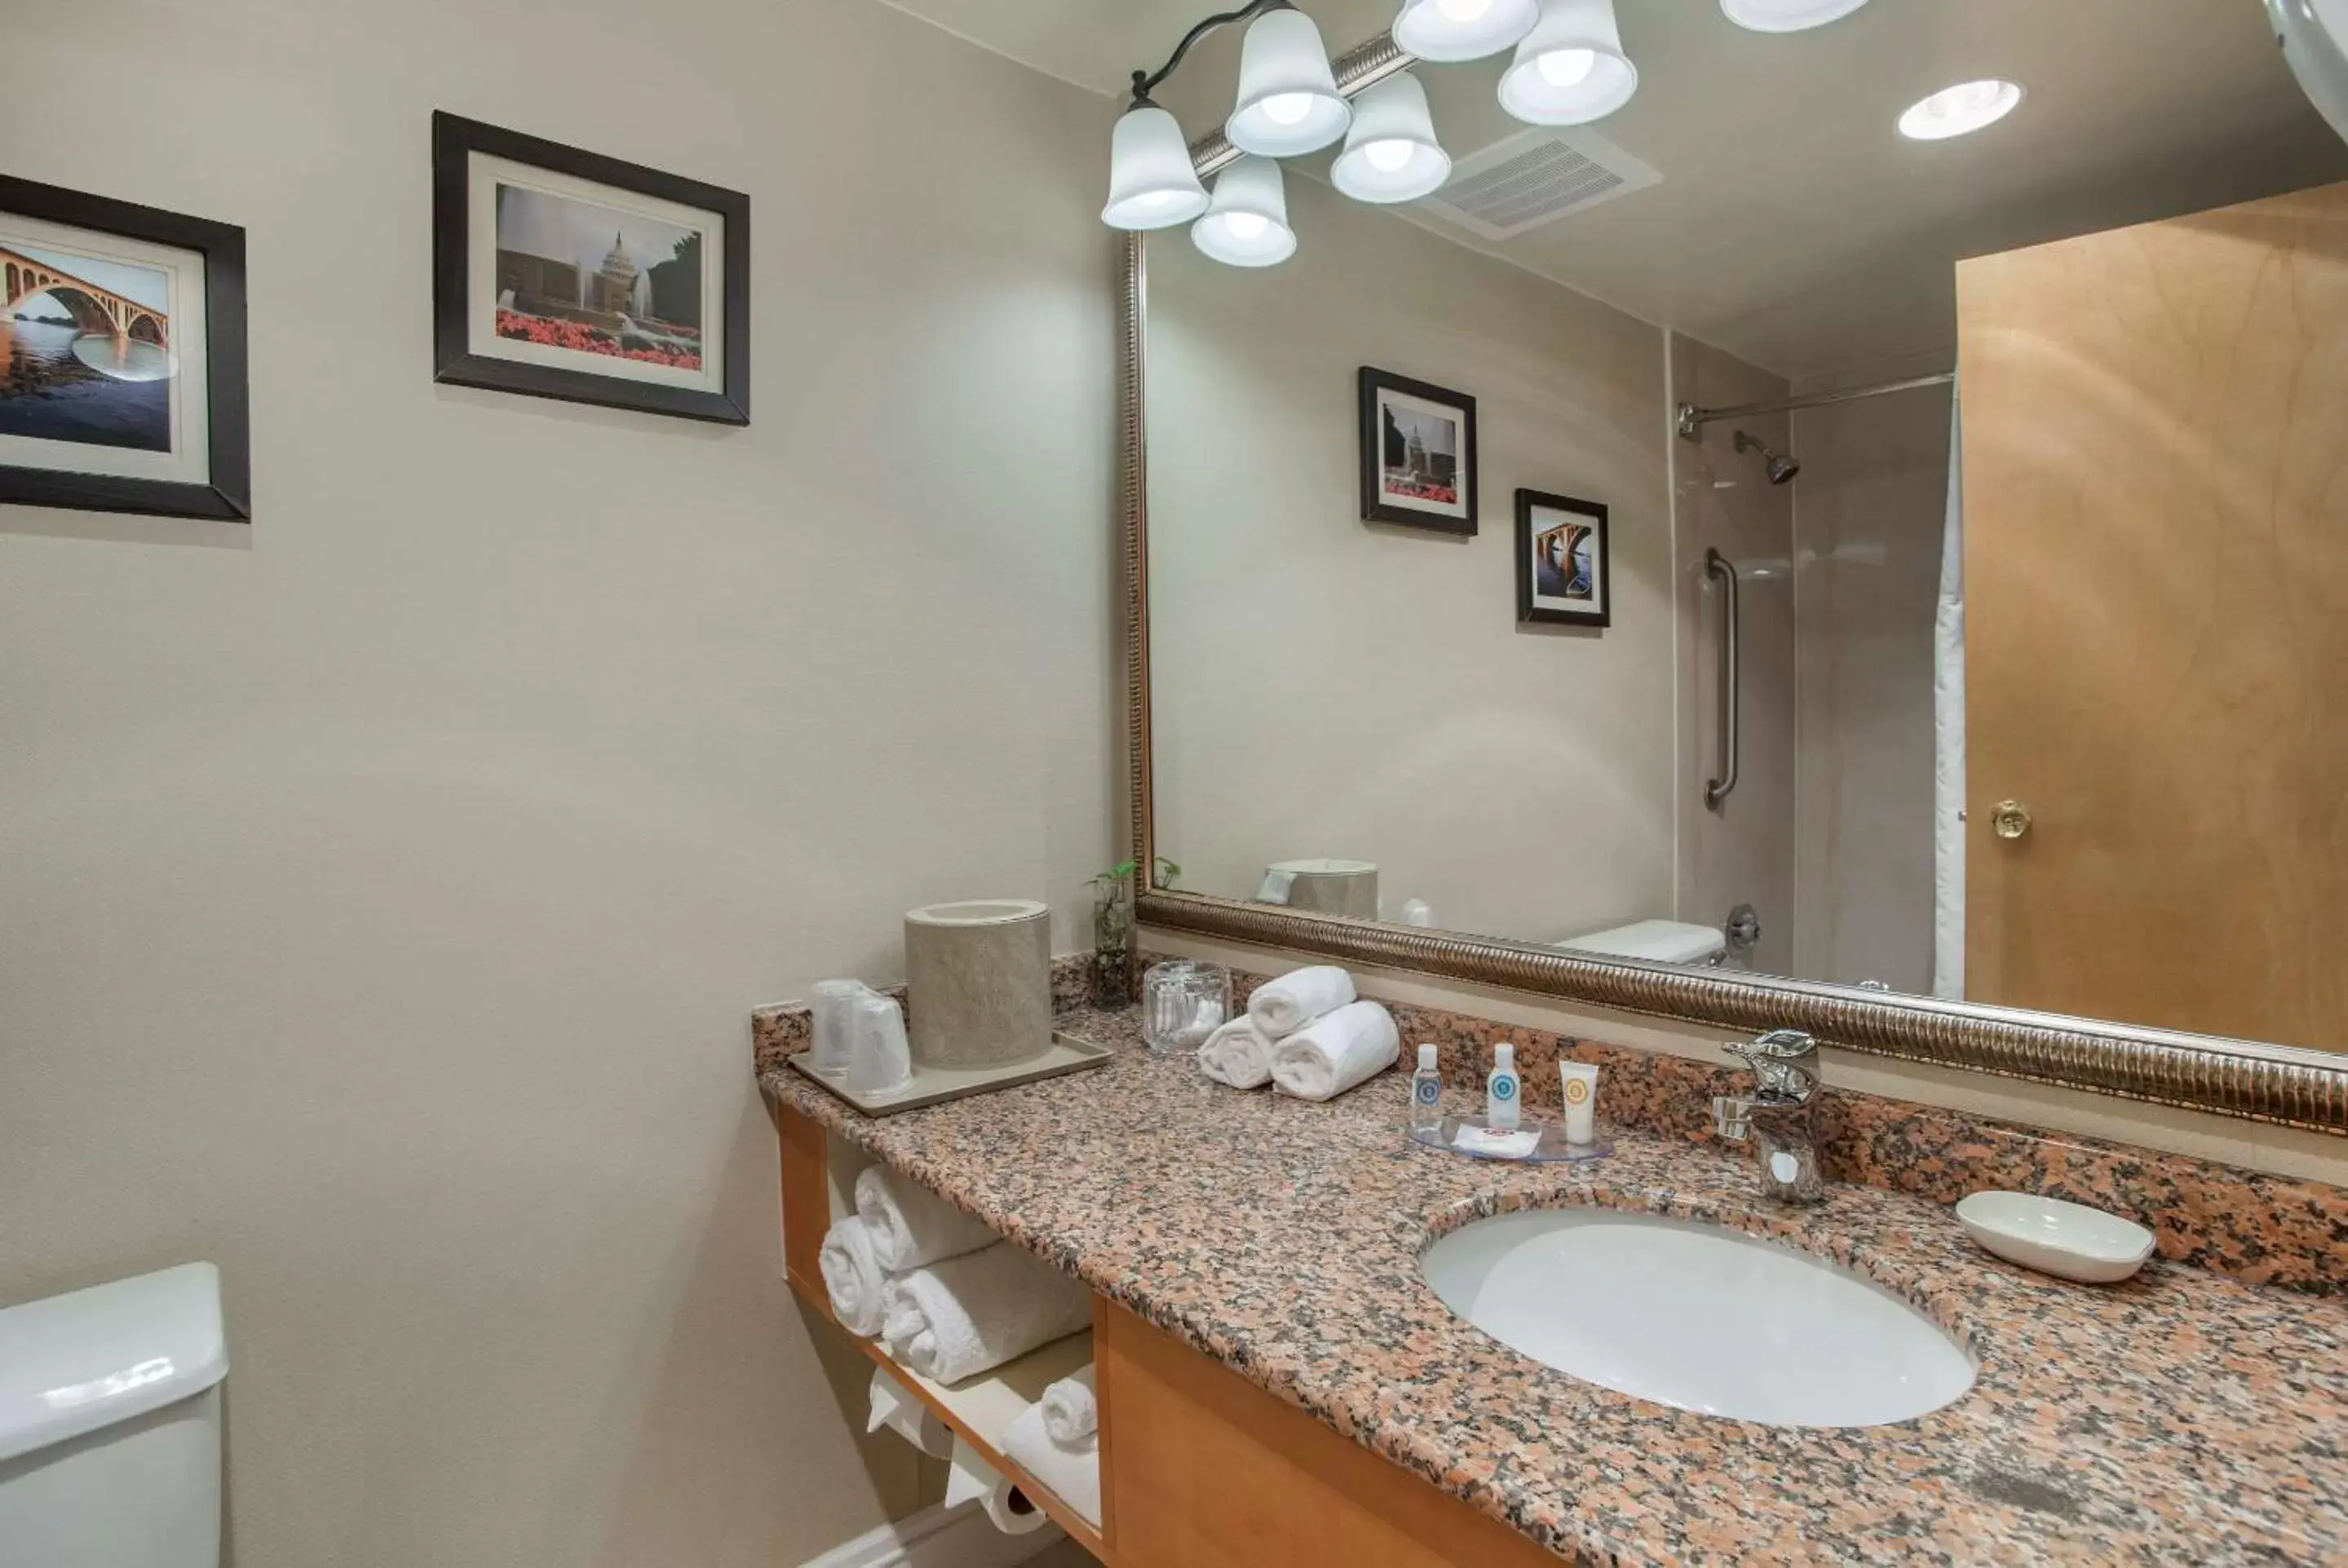 Bedroom, Bathroom in Comfort Inn Shady Grove - Gaithersburg - Rockville